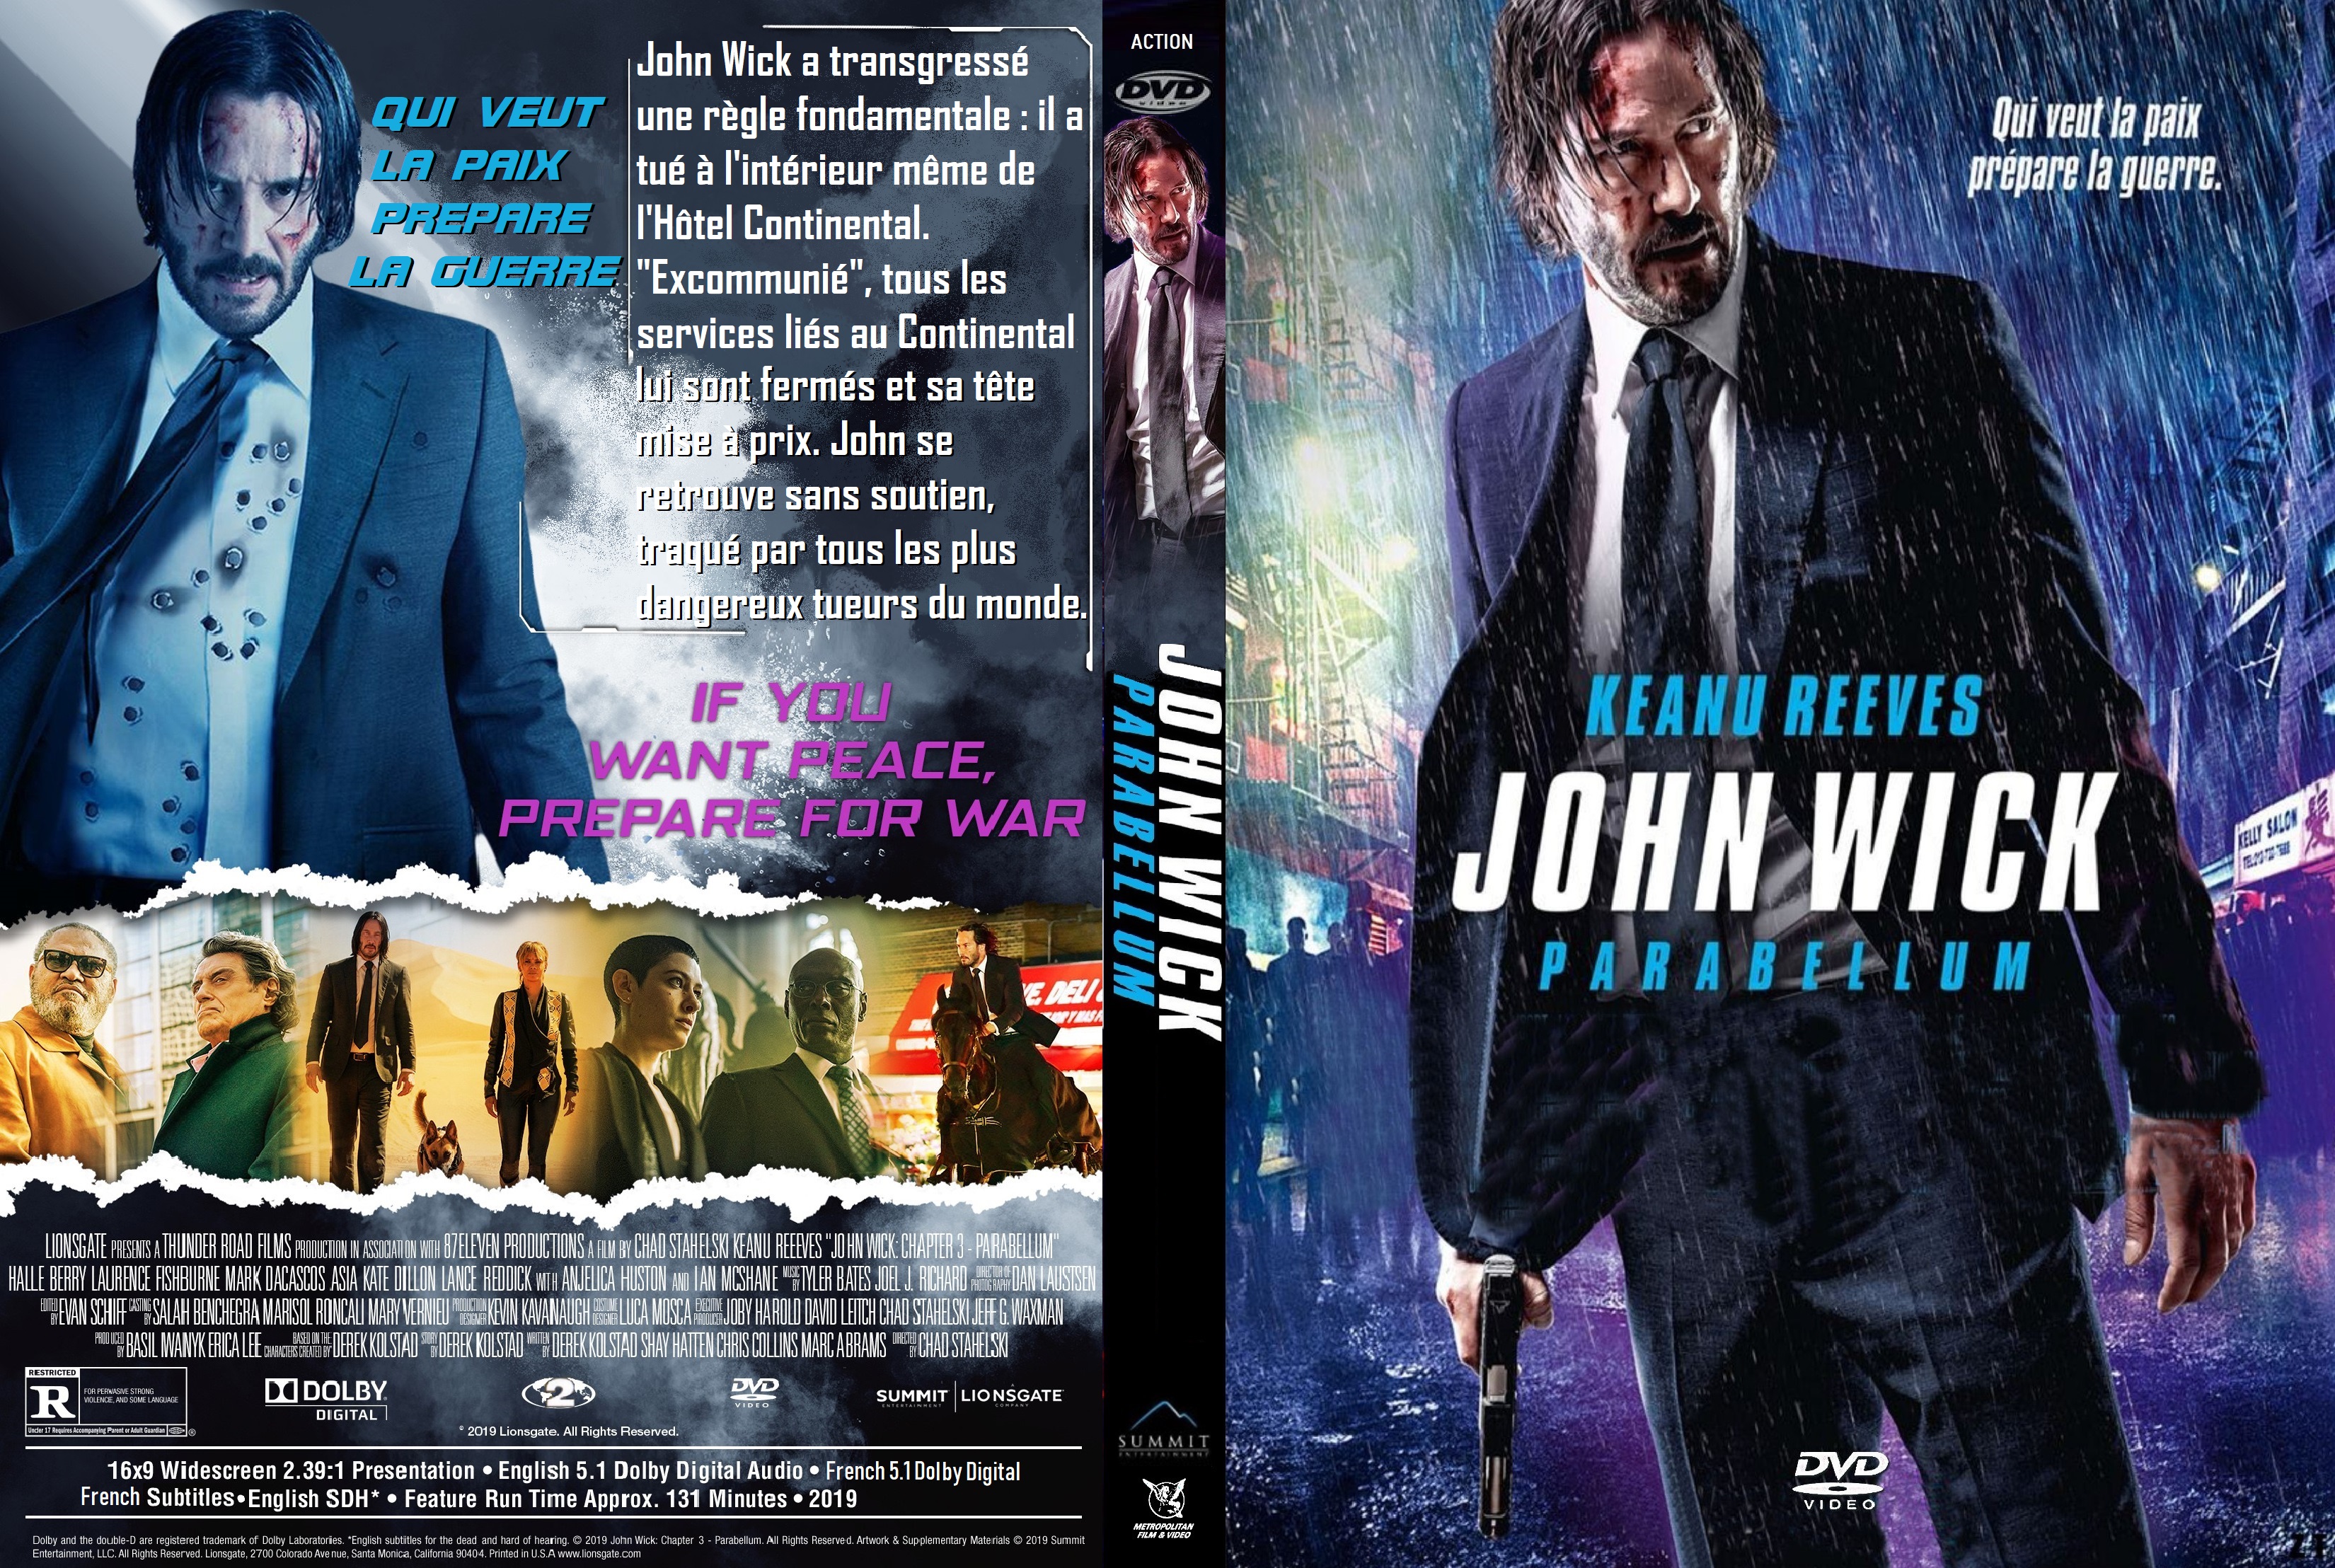 Jaquette DVD John Wick 3 Parabellum custom